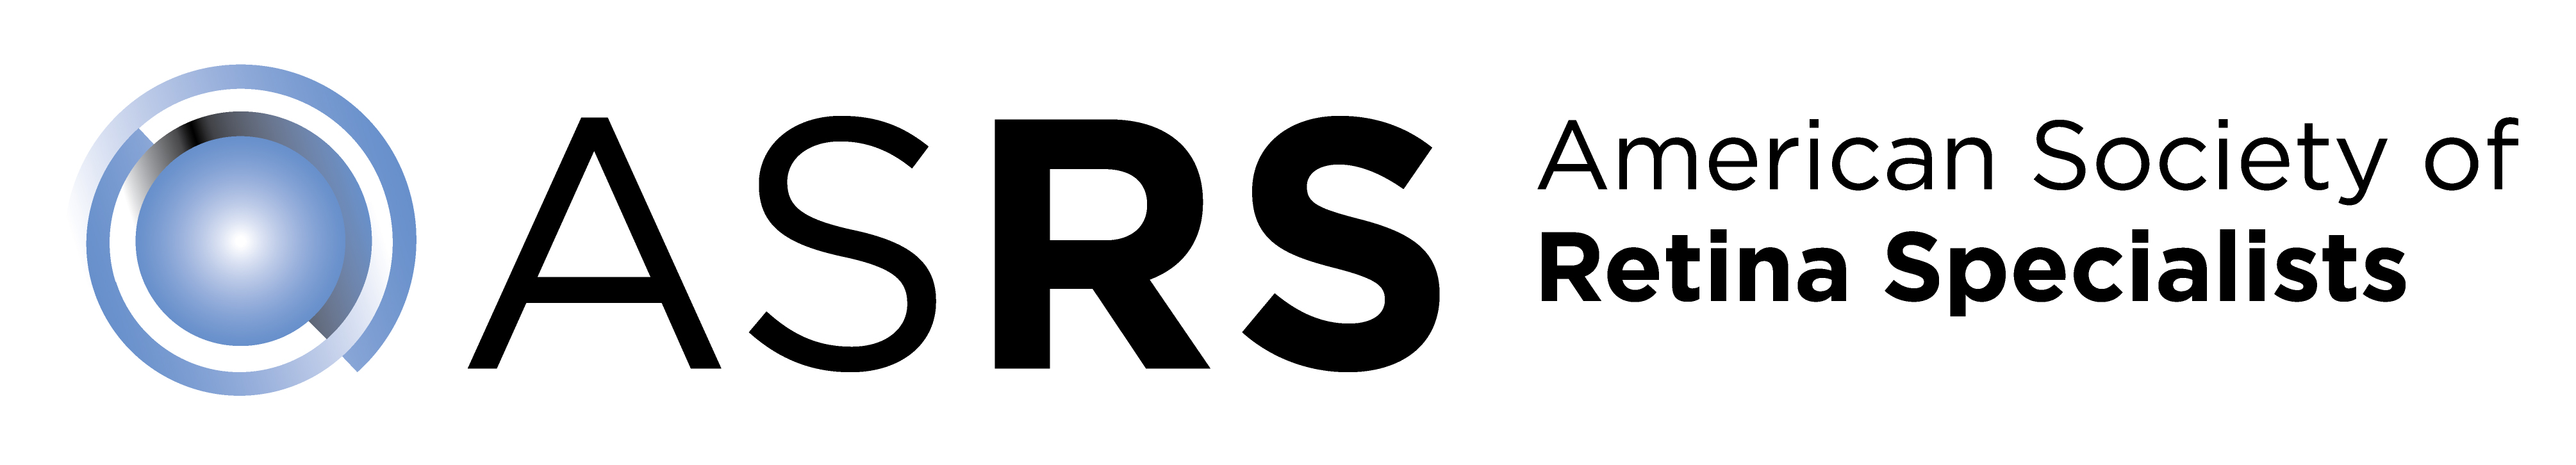 institutions-Logo.ASRS.HiRes.jpg